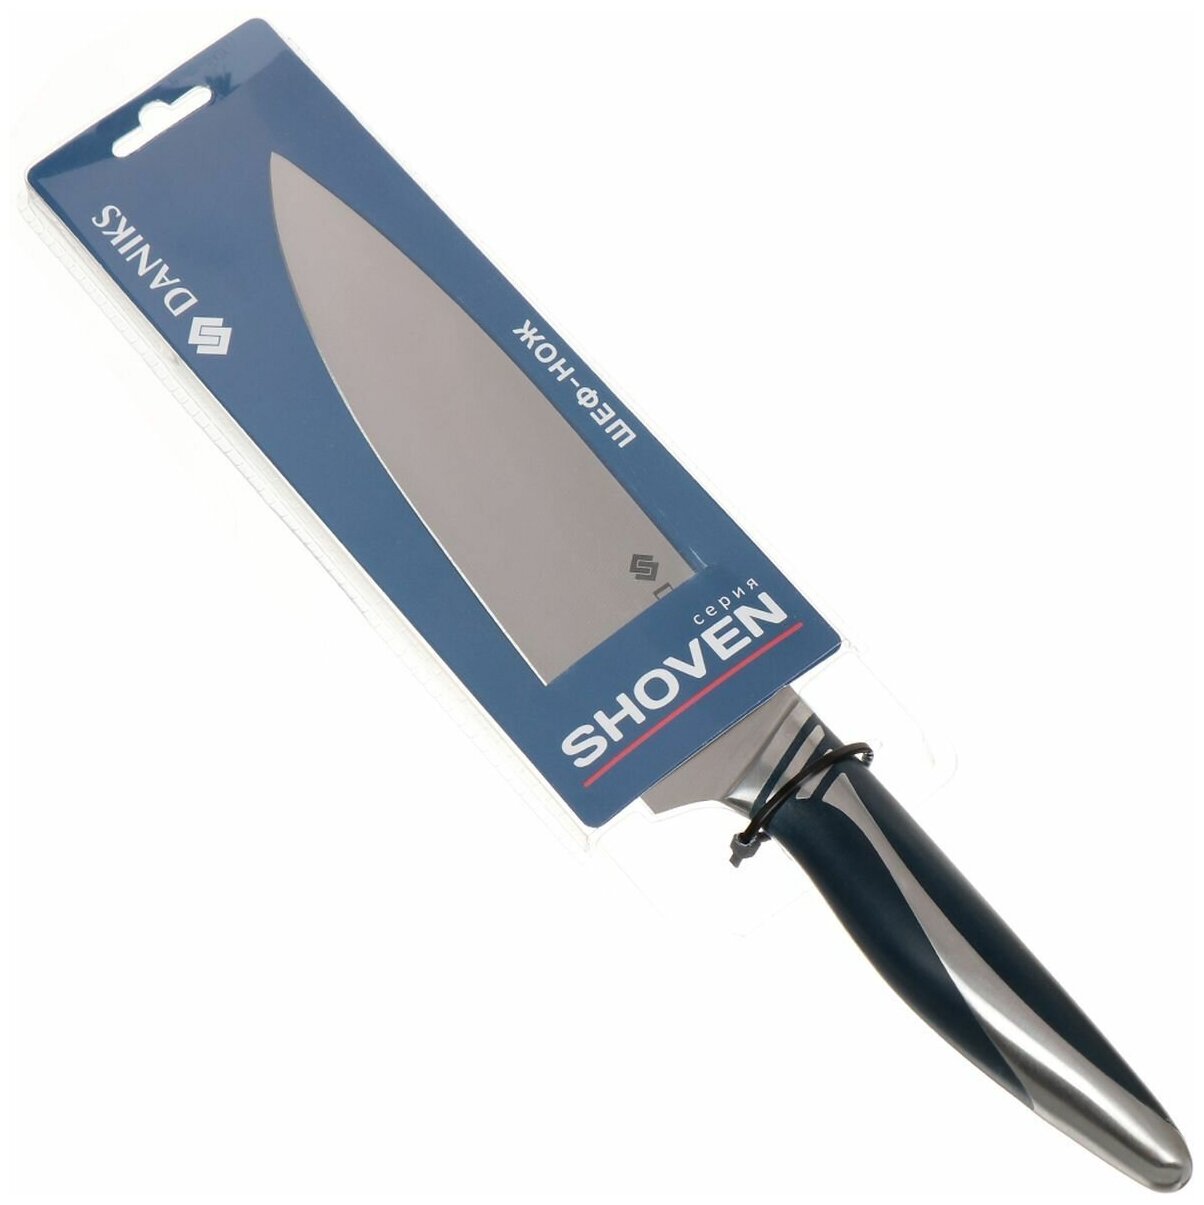 Нож кухонный Daniks, Шовэн, шеф-нож, нержавеющая сталь, 20 см, рукоятка пластик, 161711-1